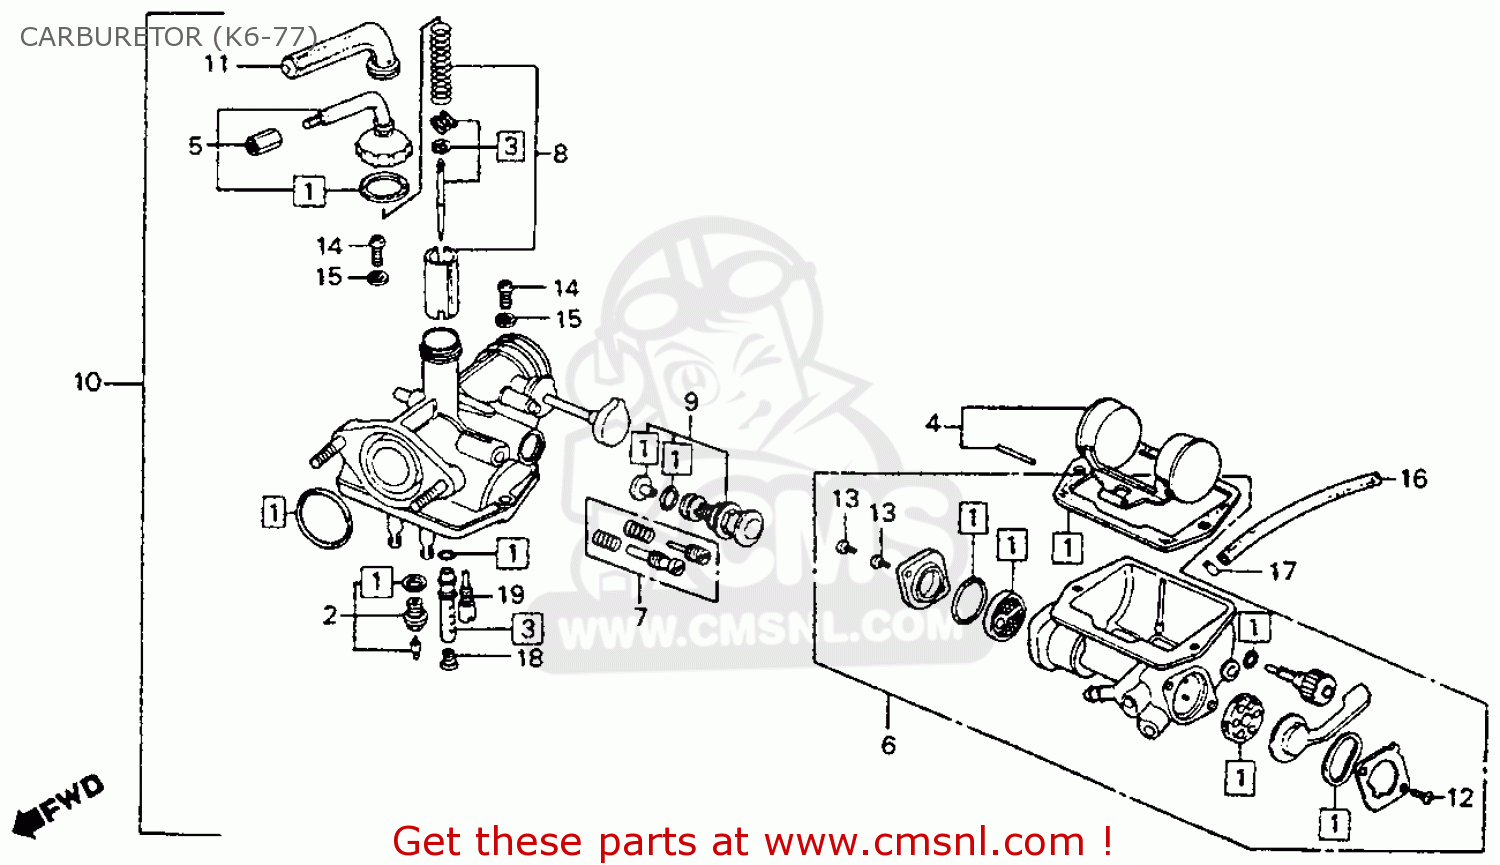 Honda ct90 carburetor adjustment #6